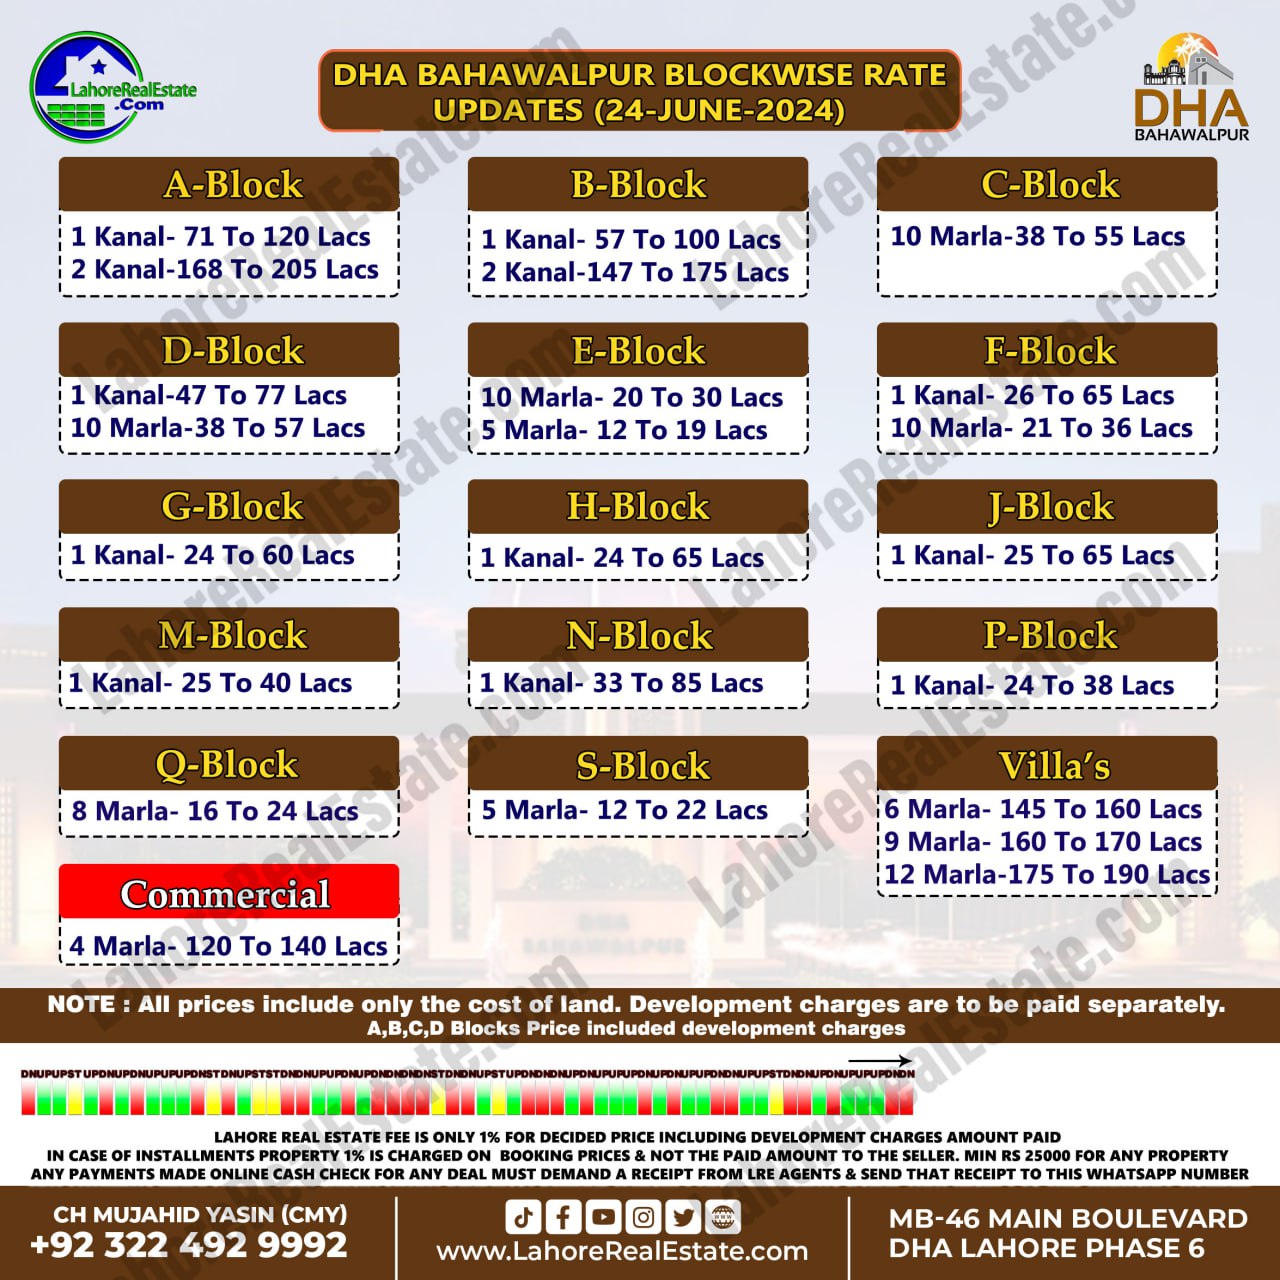 DHA Bahawalpur Plot Prices Blockwise Rates June 24, 2024